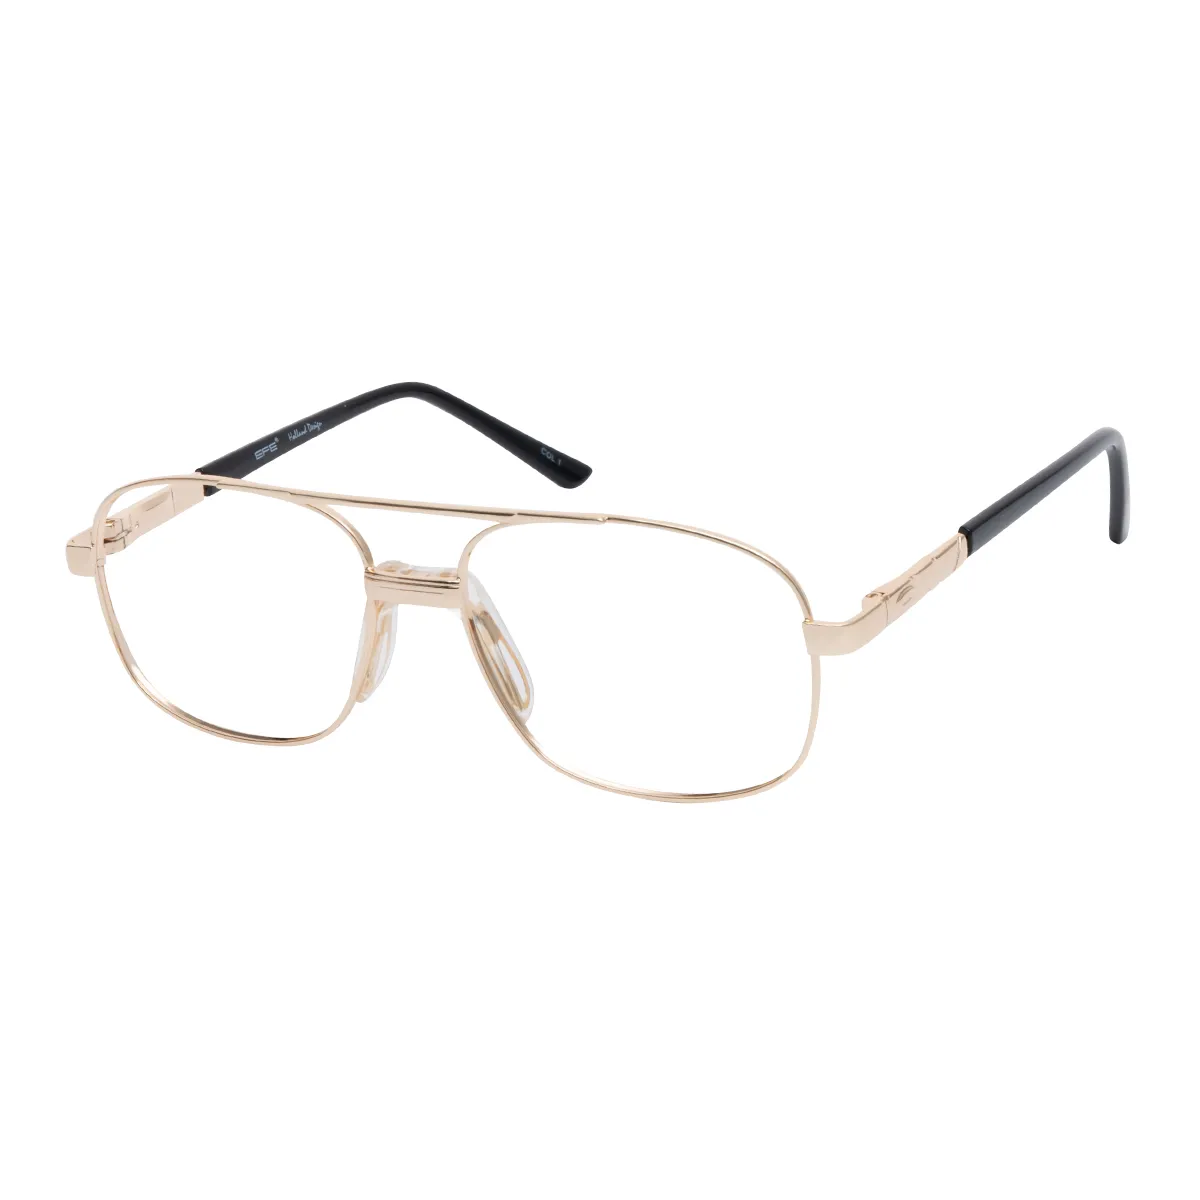 Atticus - Aviator Gold Glasses for Men